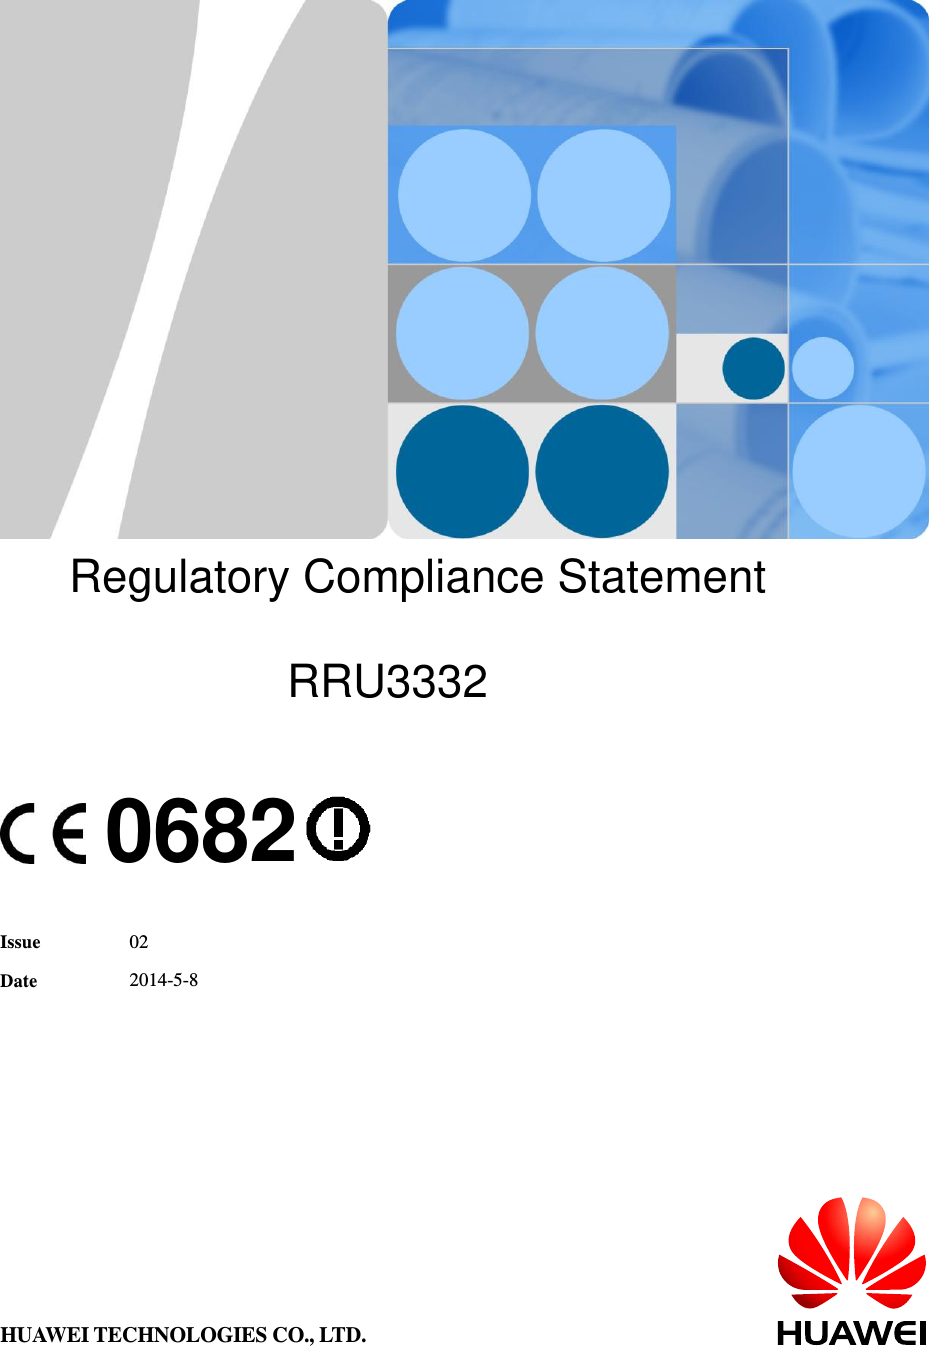               Regulatory Compliance Statement  RRU3332       0682   Issue 02 Date 2014-5-8 HUAWEI TECHNOLOGIES CO., LTD. 